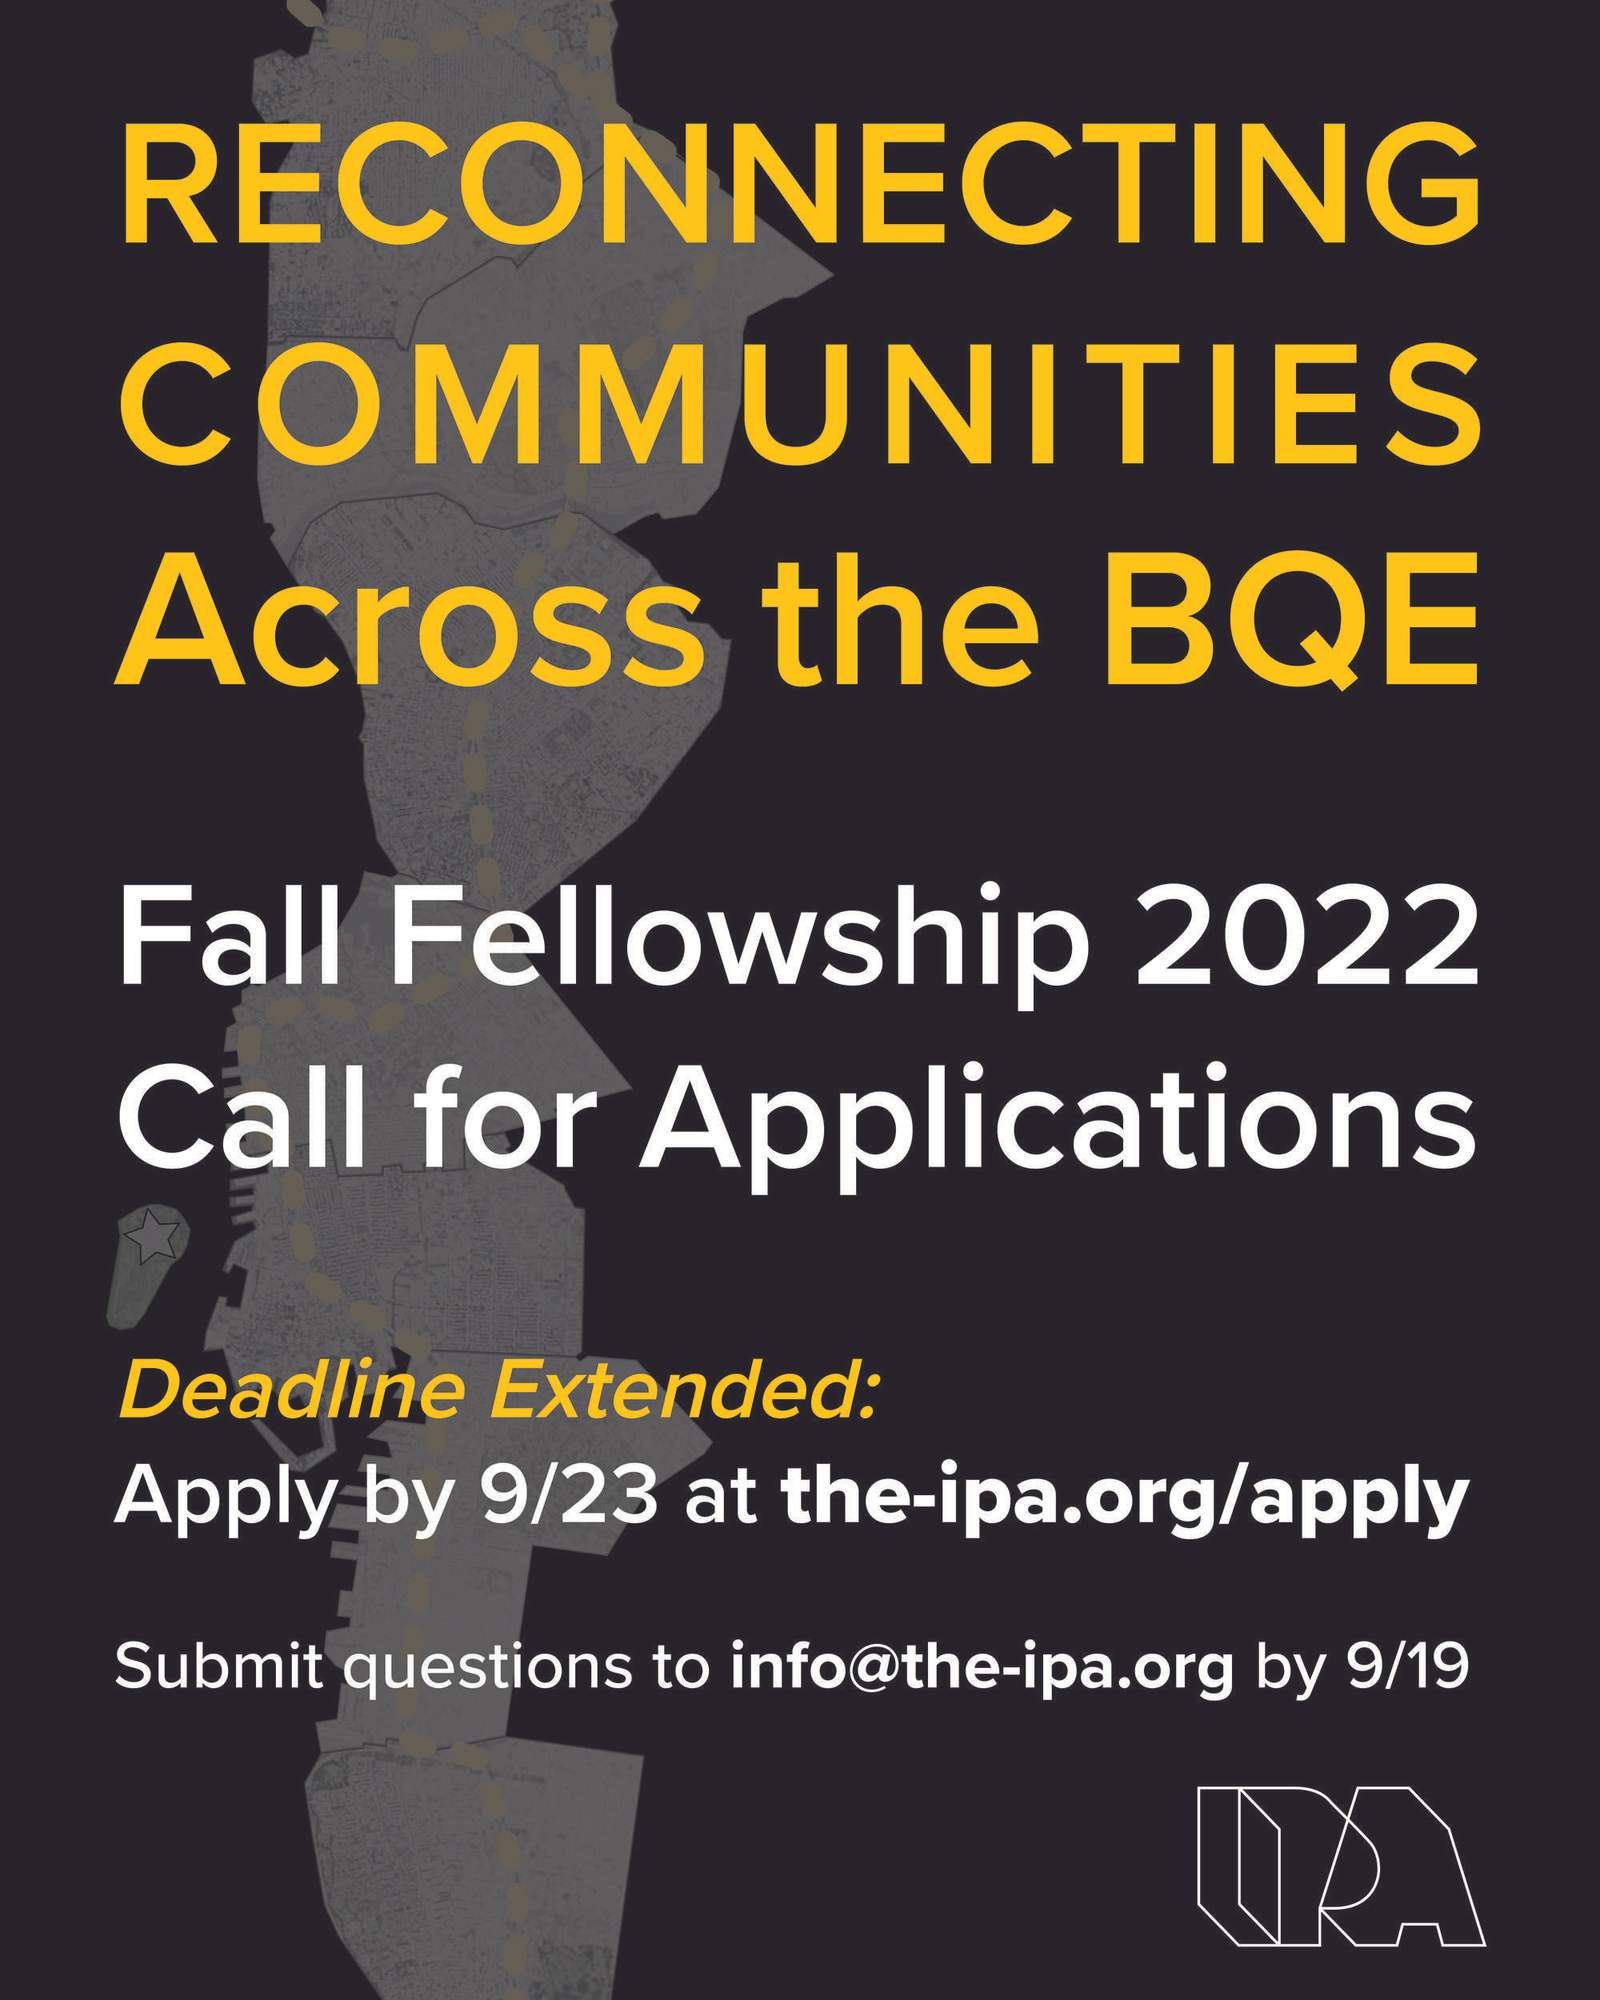 2022 Fall Fellowship: Reconnecting Communities across the BQE زمالة الخريف لعام 2022: إعادة ربط المجتمعات عبر BQE